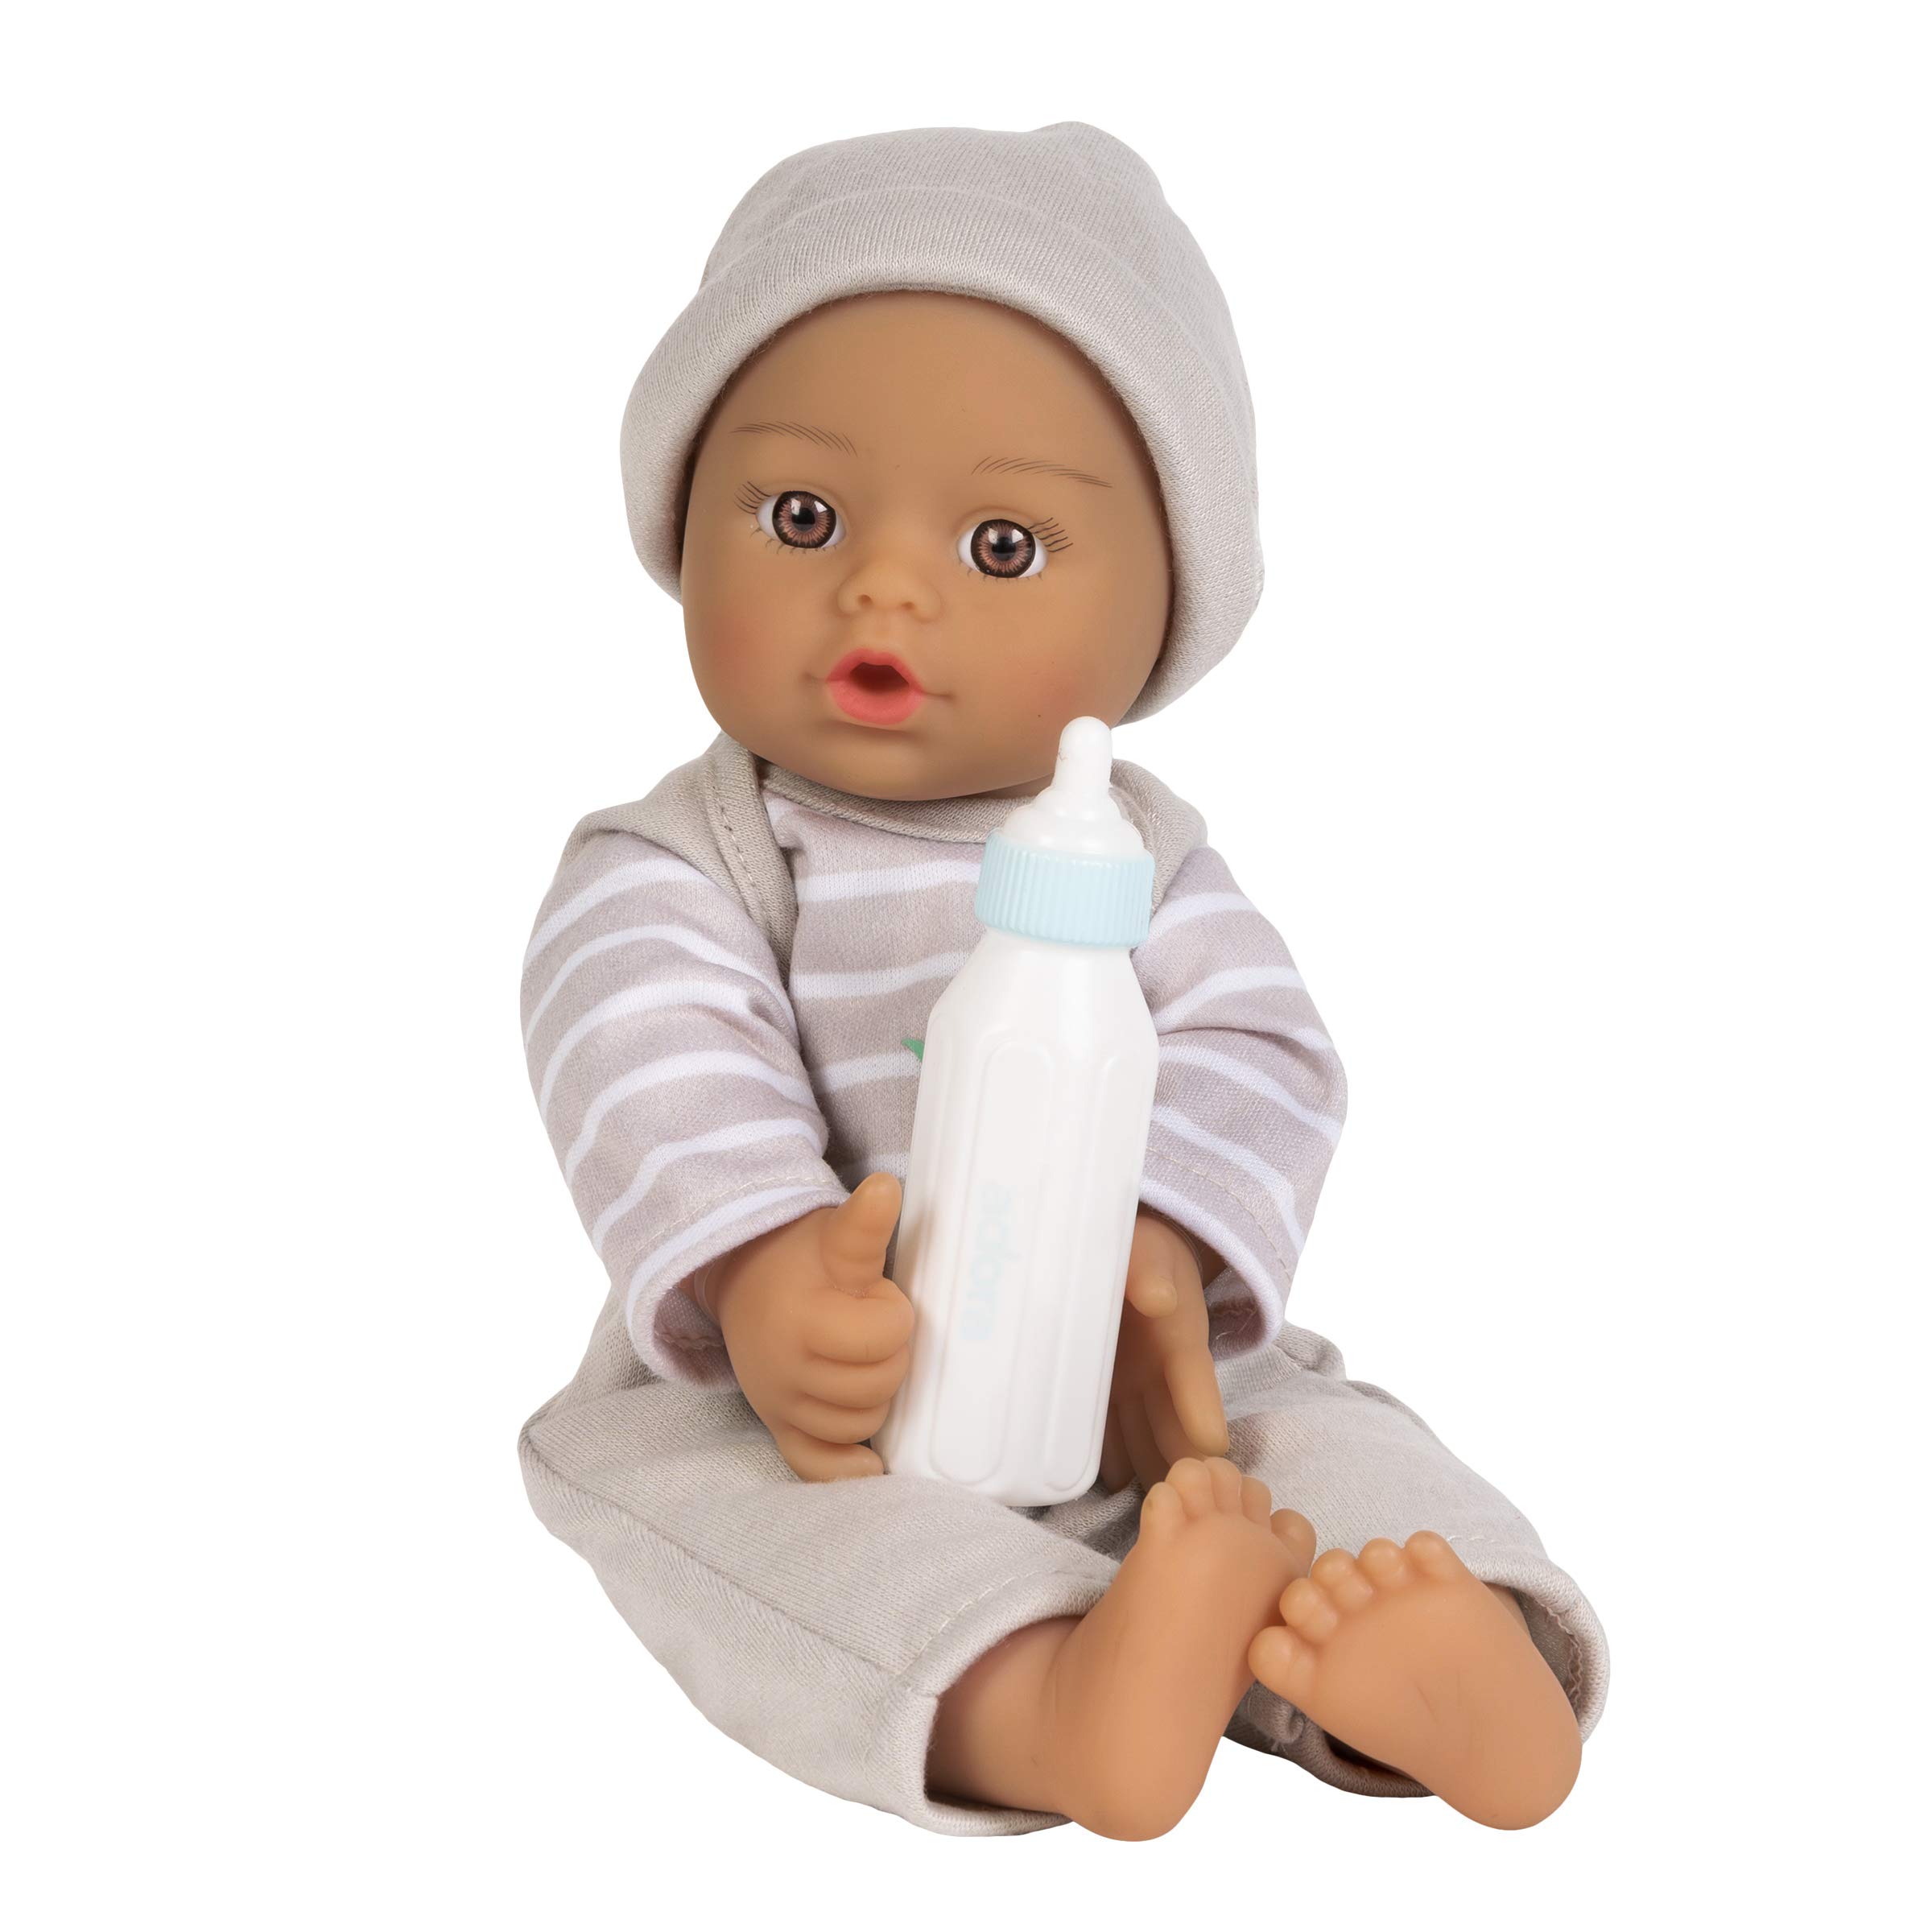 Adora Soft Baby Doll Boy, 11 inch Sweet Baby Dinosaur, Machine Washable (Amazon Exclusive) 1+